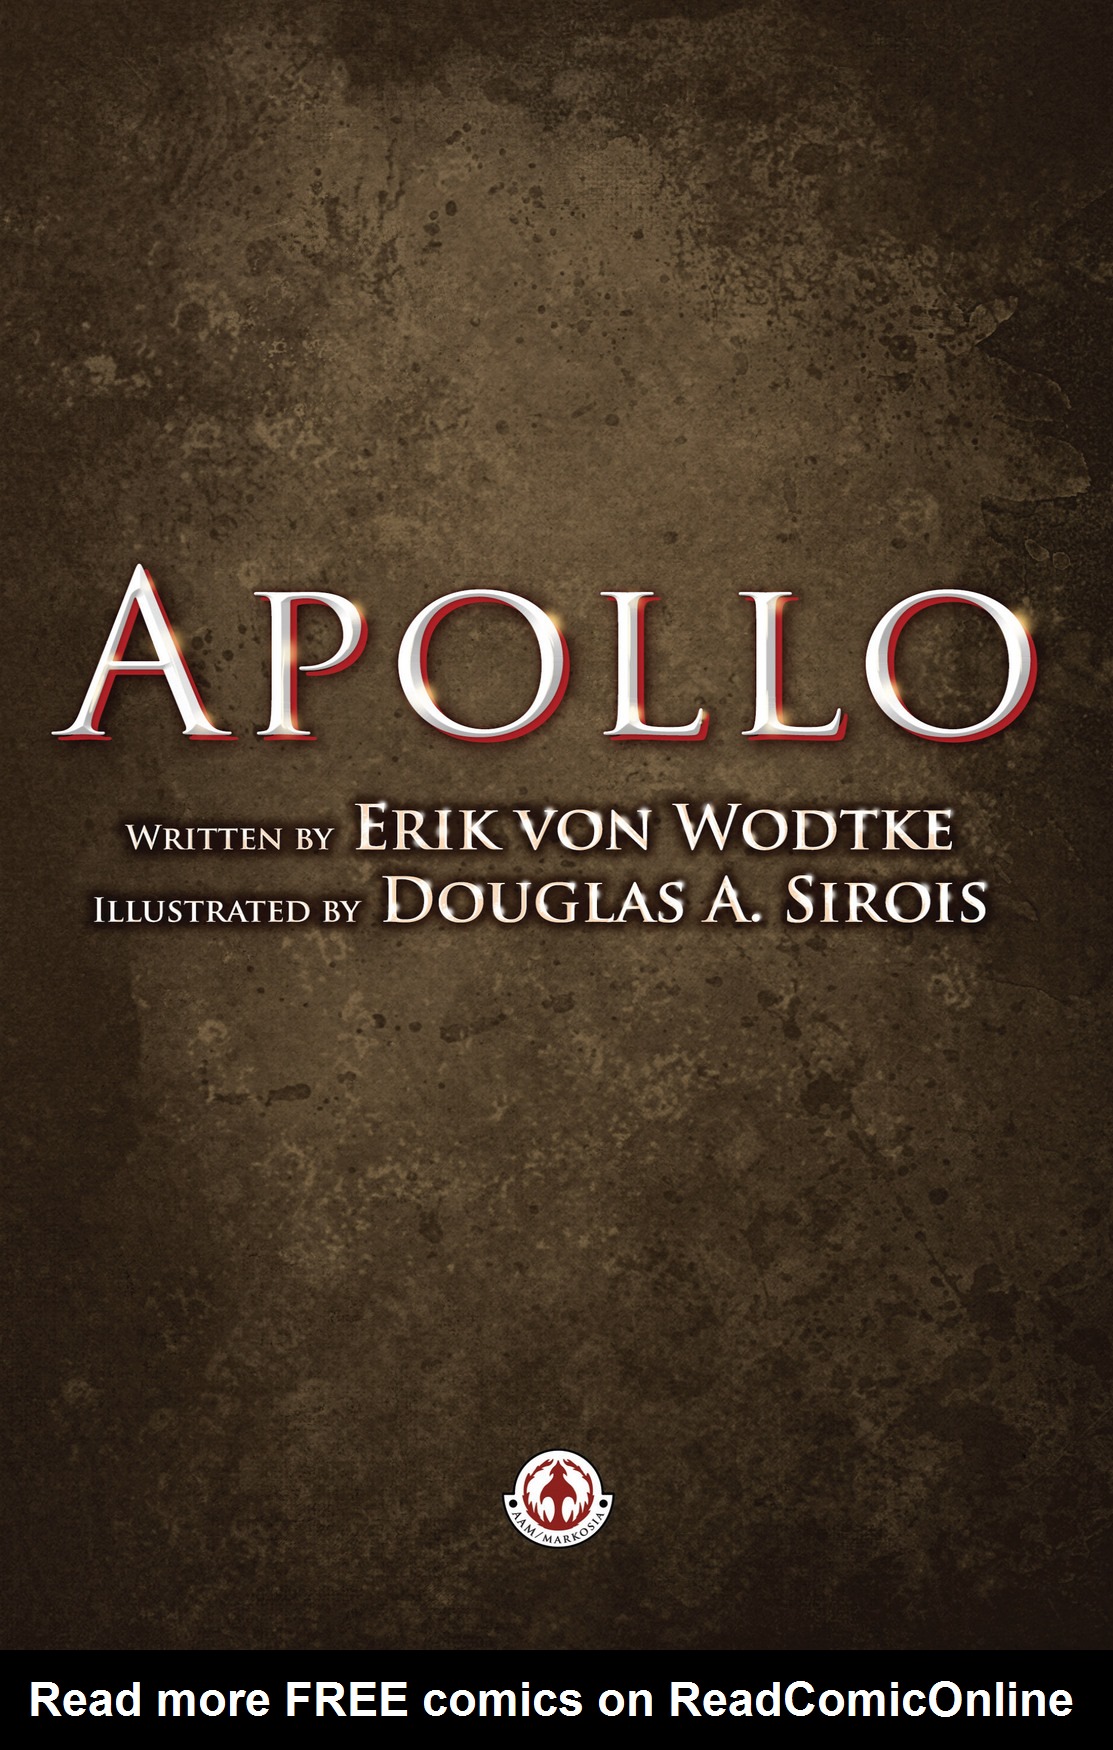 Read online Apollo comic -  Issue # TPB - 2